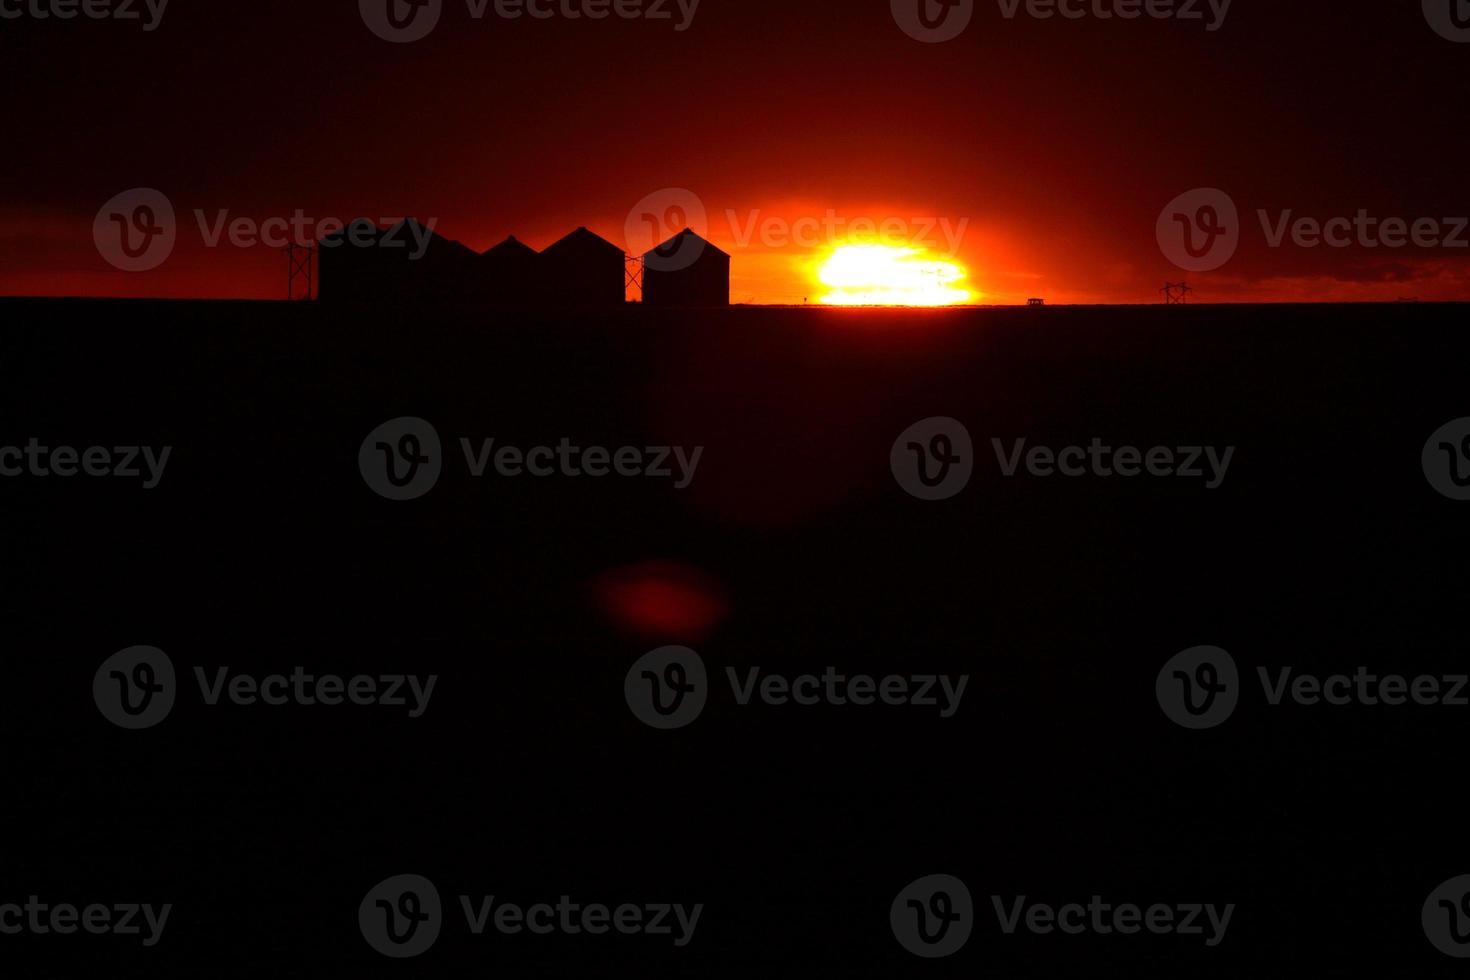 Sun setting behind metal granaries in Saskatchewan photo